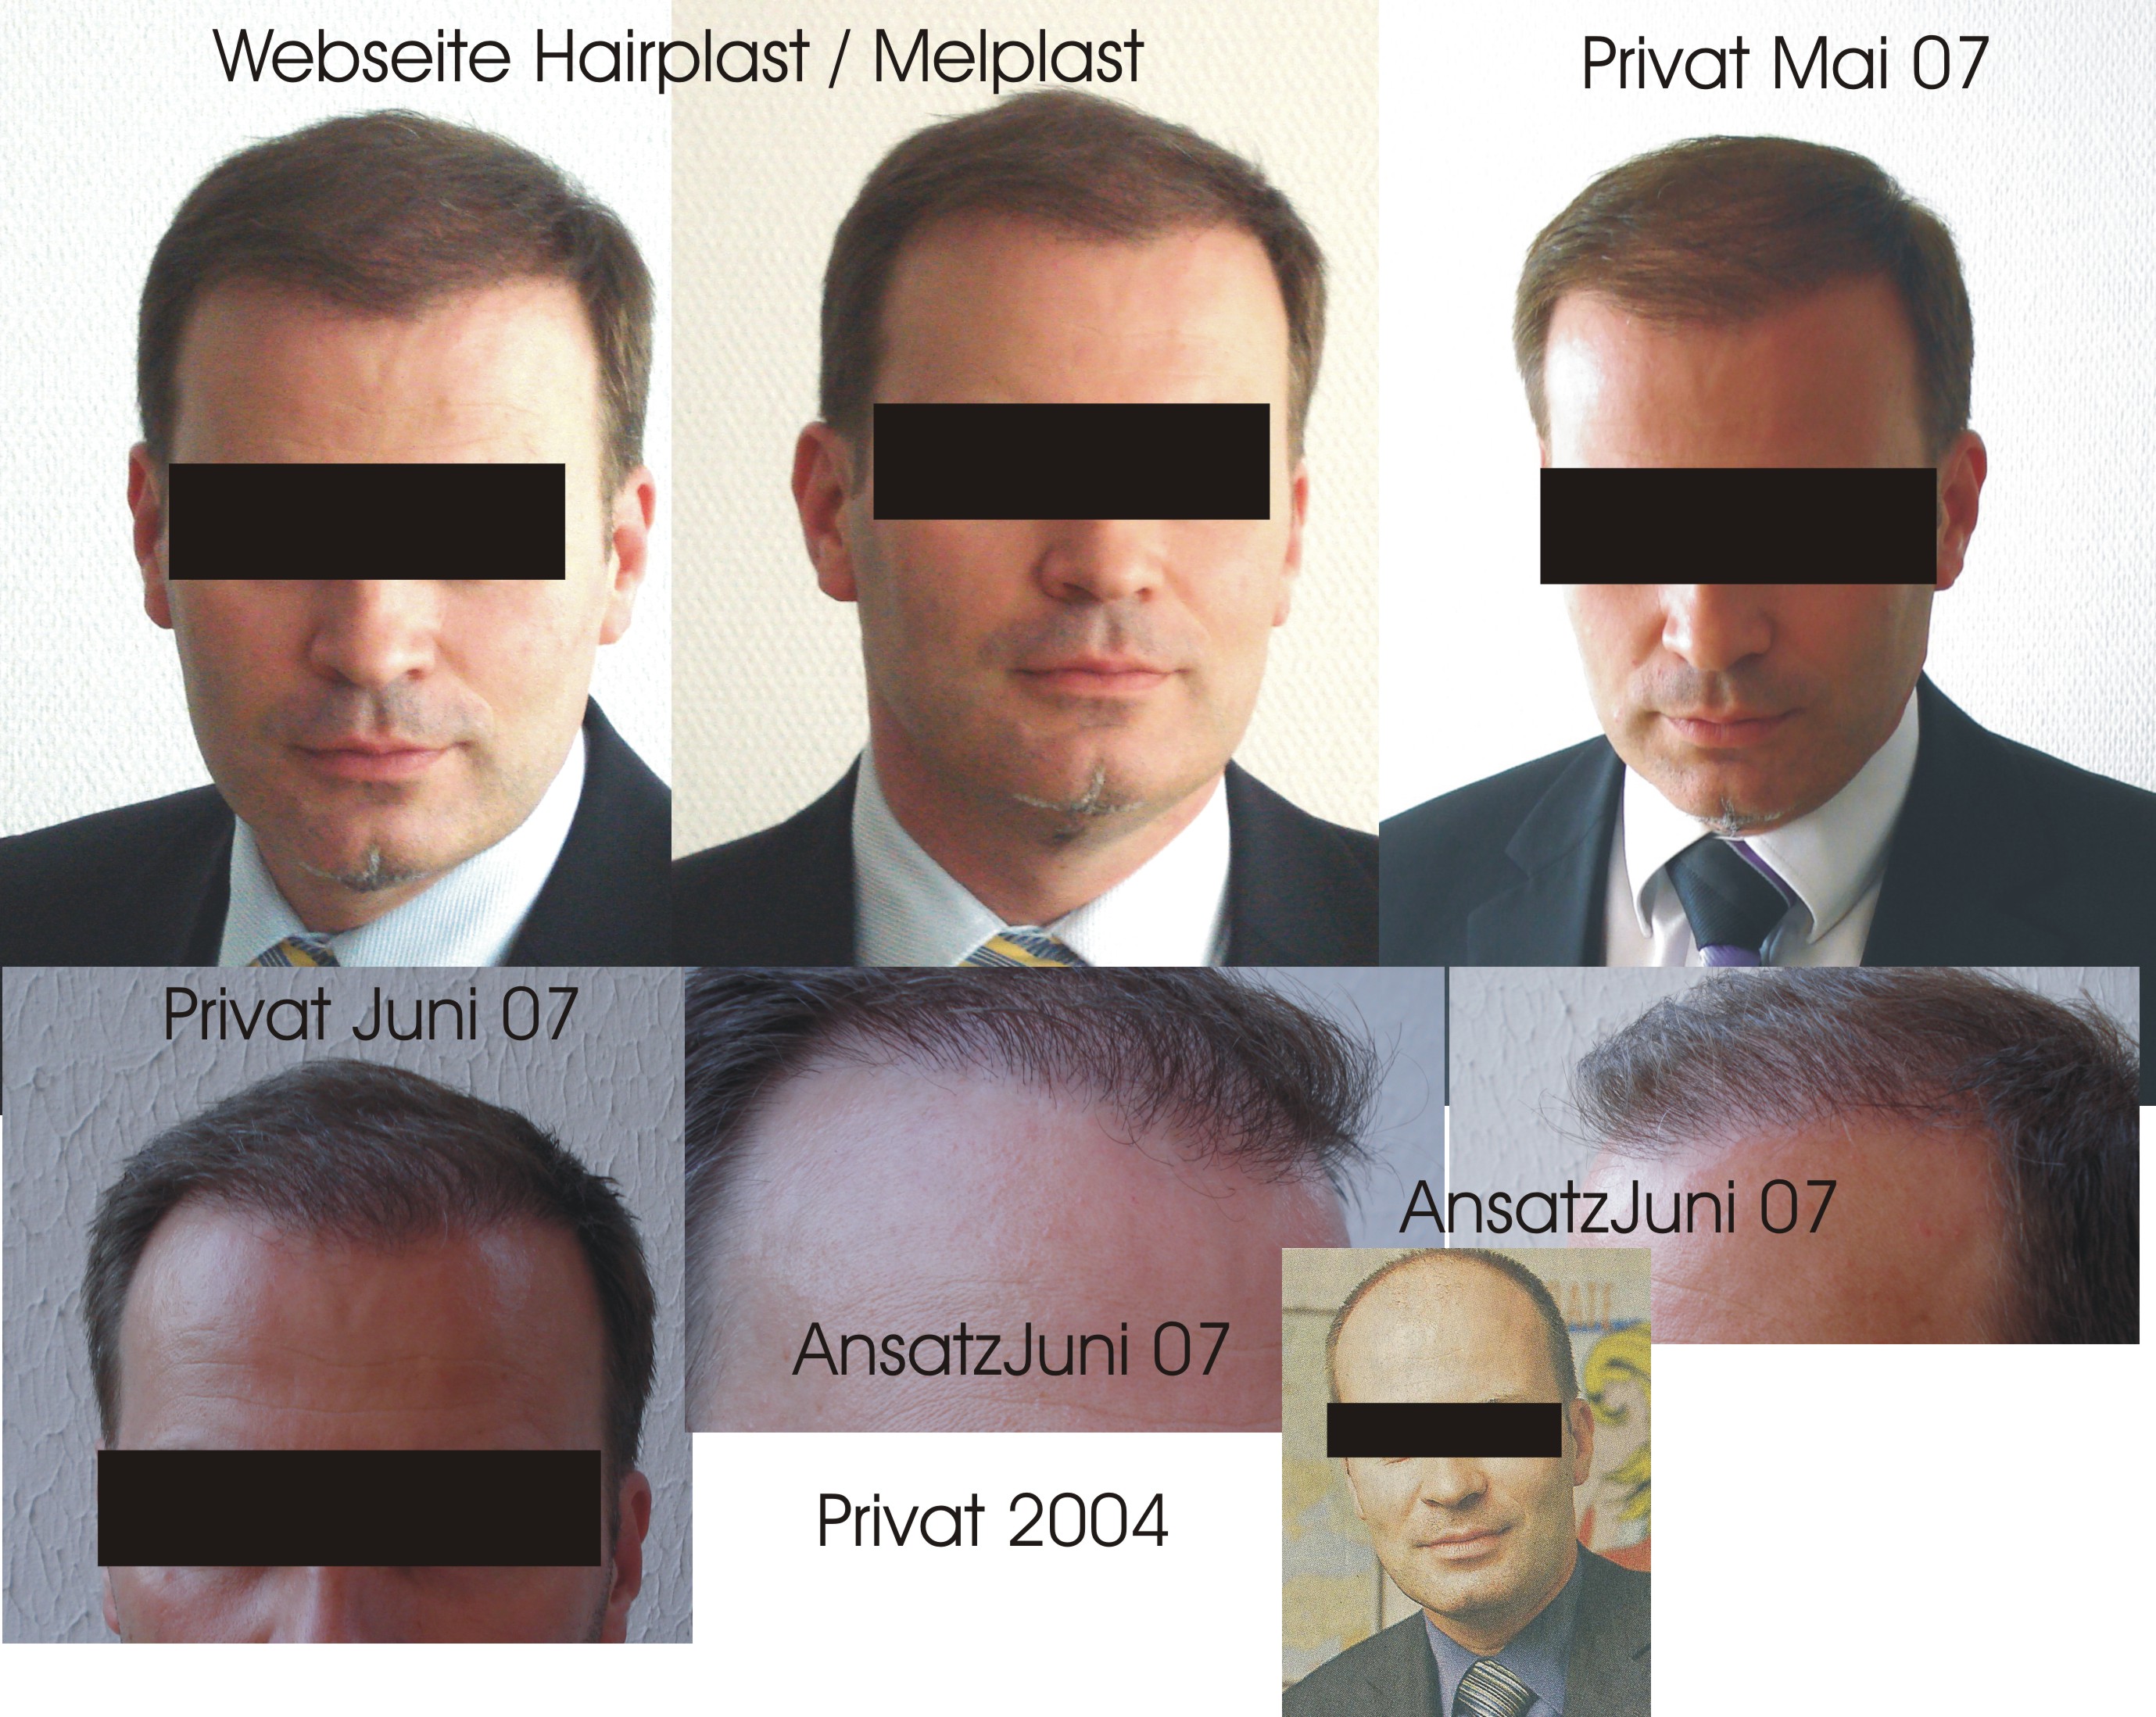 http://alopezie.de/foren/transplant/index.php/fa/461/